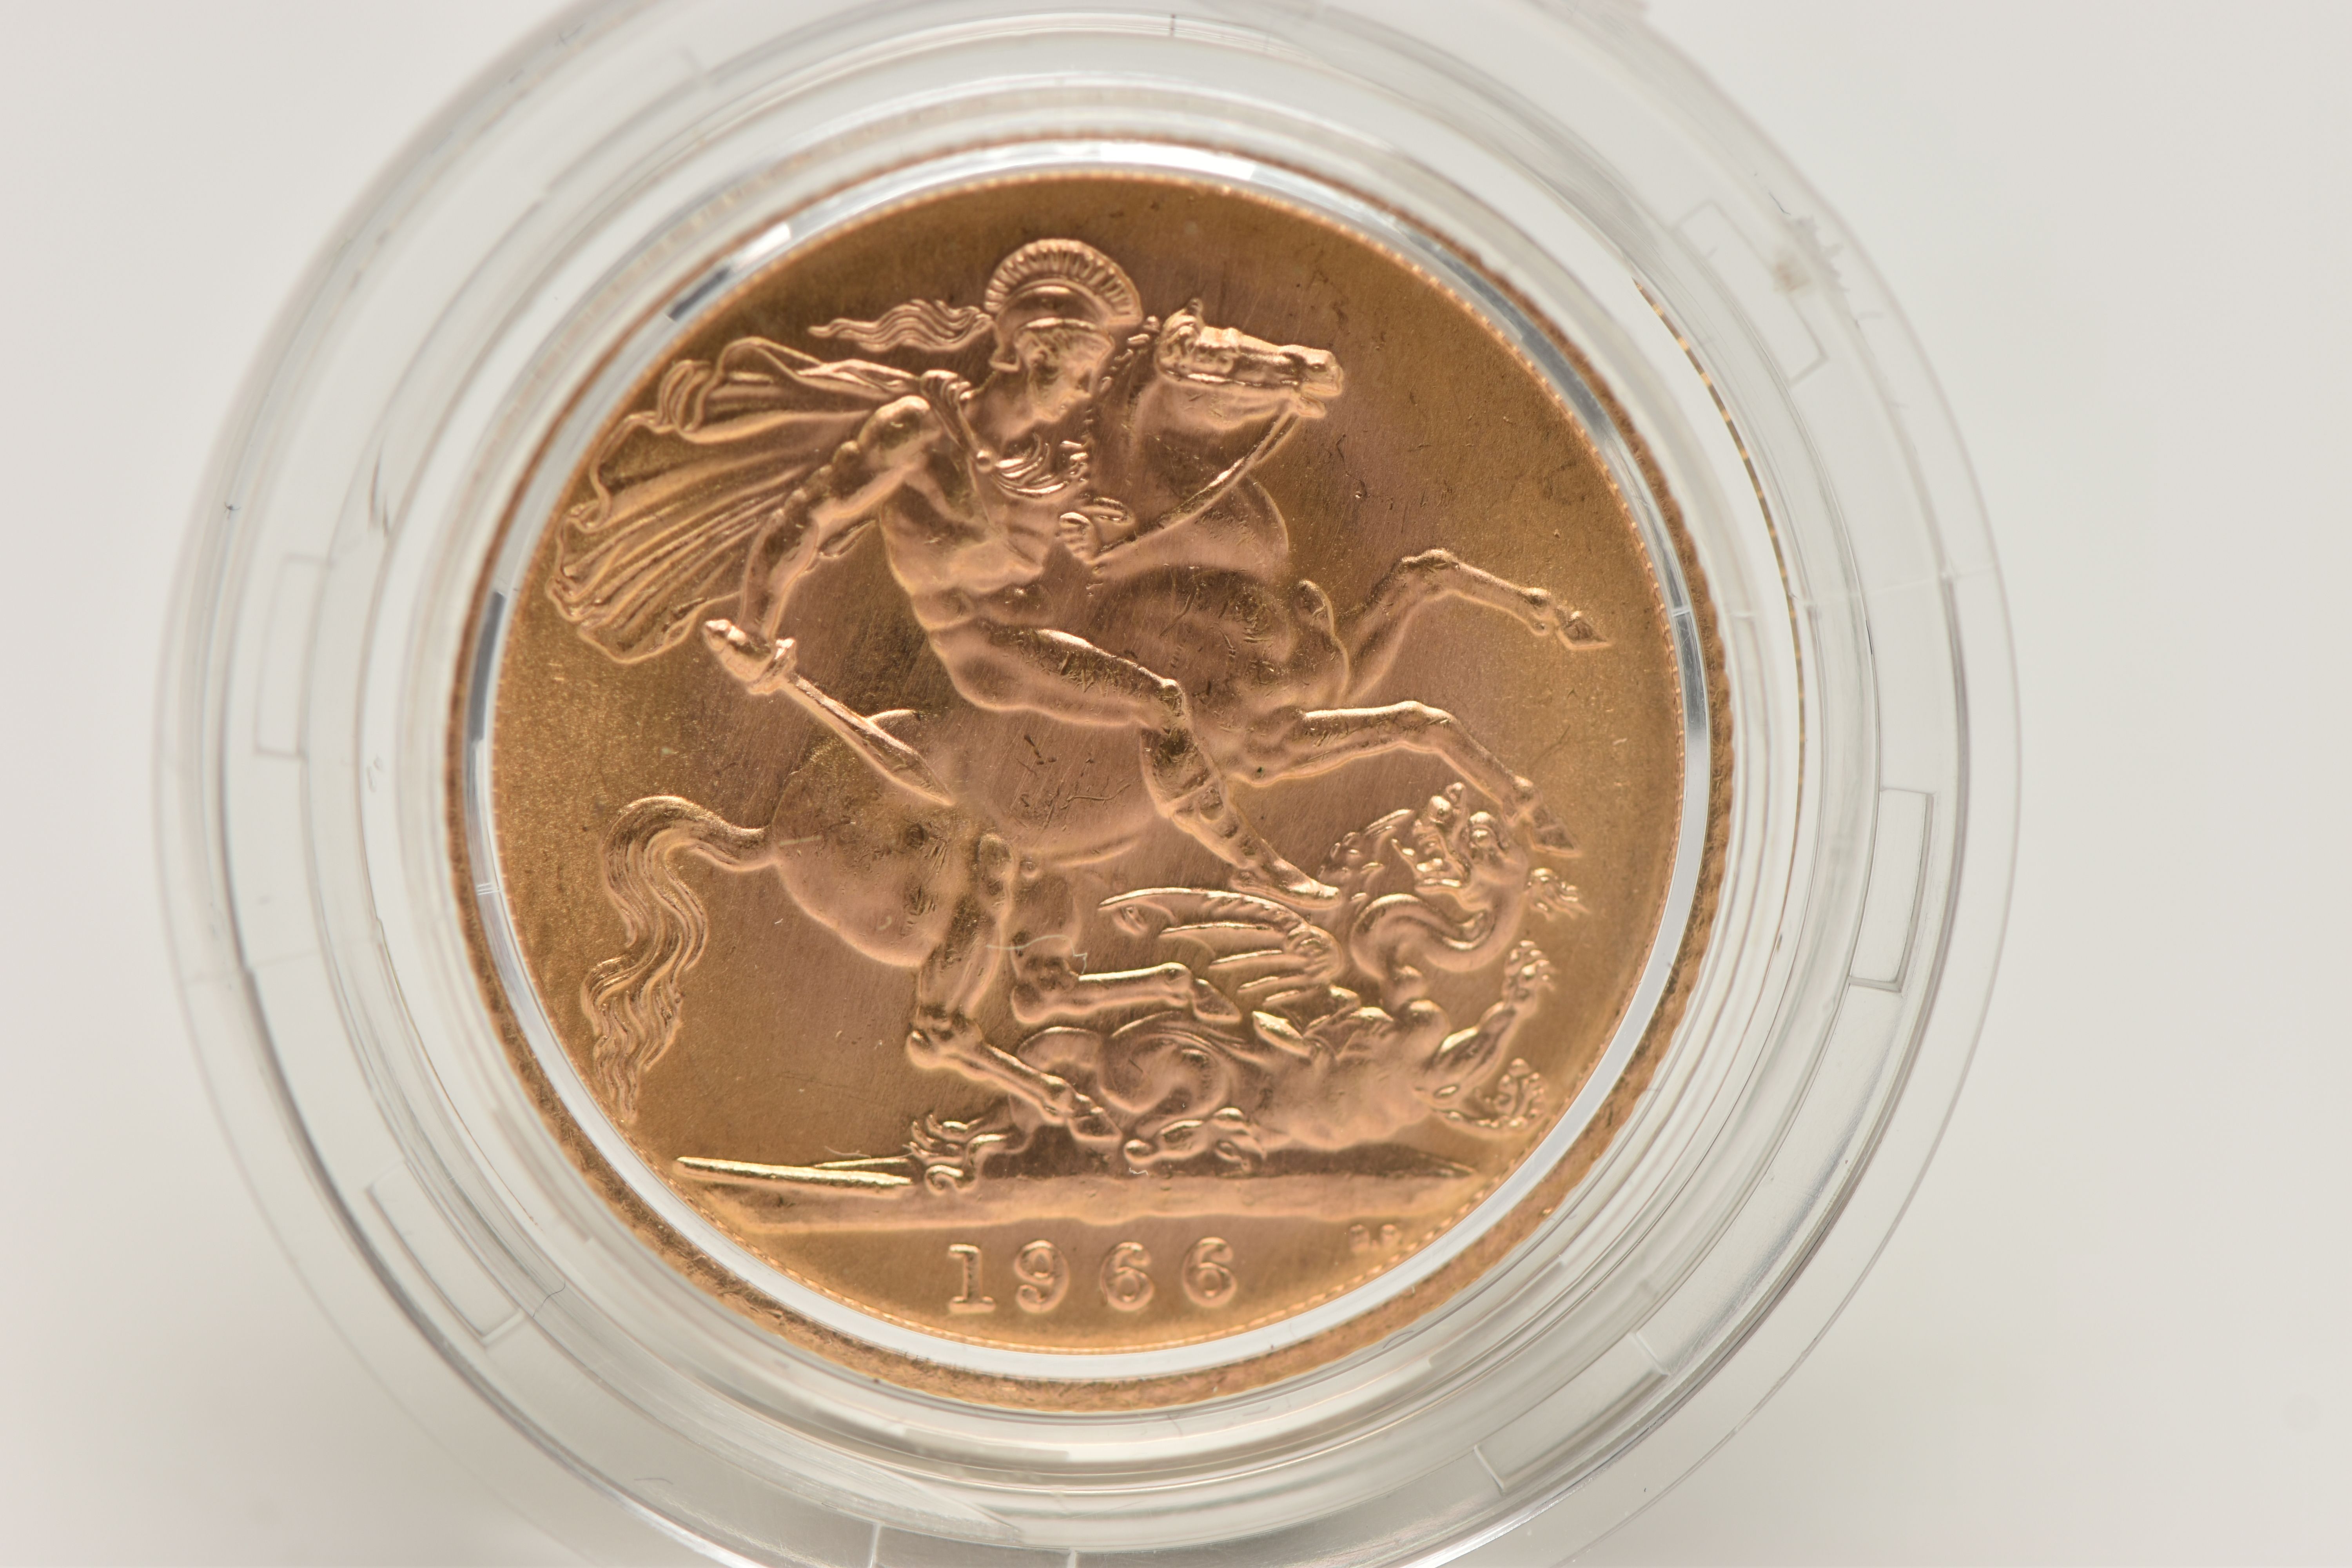 ROYAL MINT FULL GOLD SOVEREIGN COIN QUEEN ELIZABETH II 1966, .916 fine, 7.98 gram, 22.05mm,